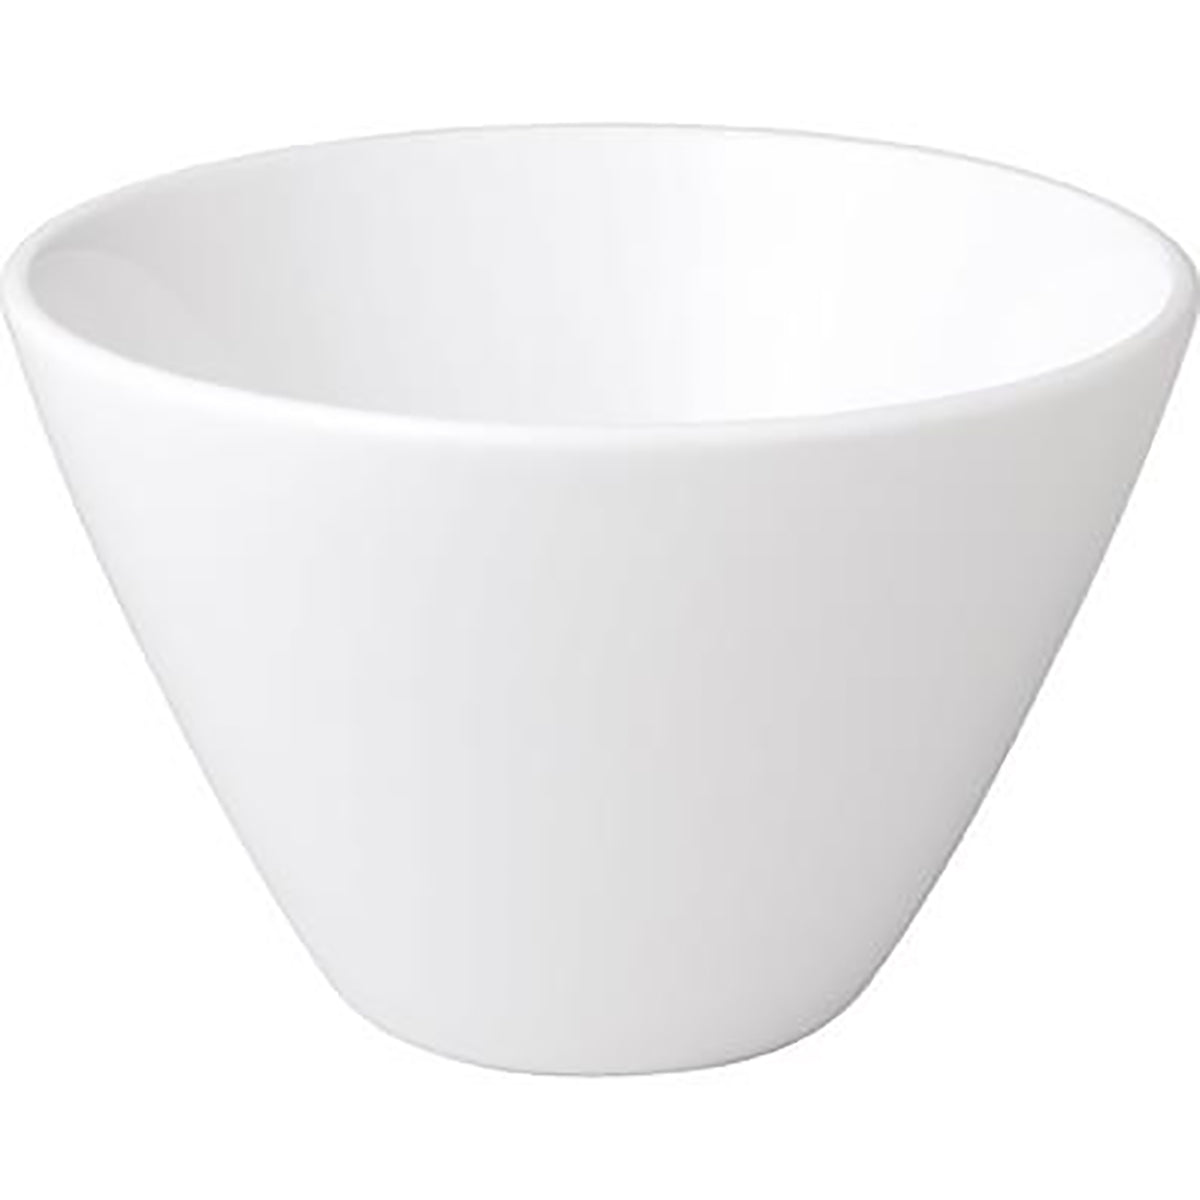 94378 Royal Porcelain Chelsea Cereal Bowl Tapered 135mm (5507) Tomkin Australia Hospitality Supplies